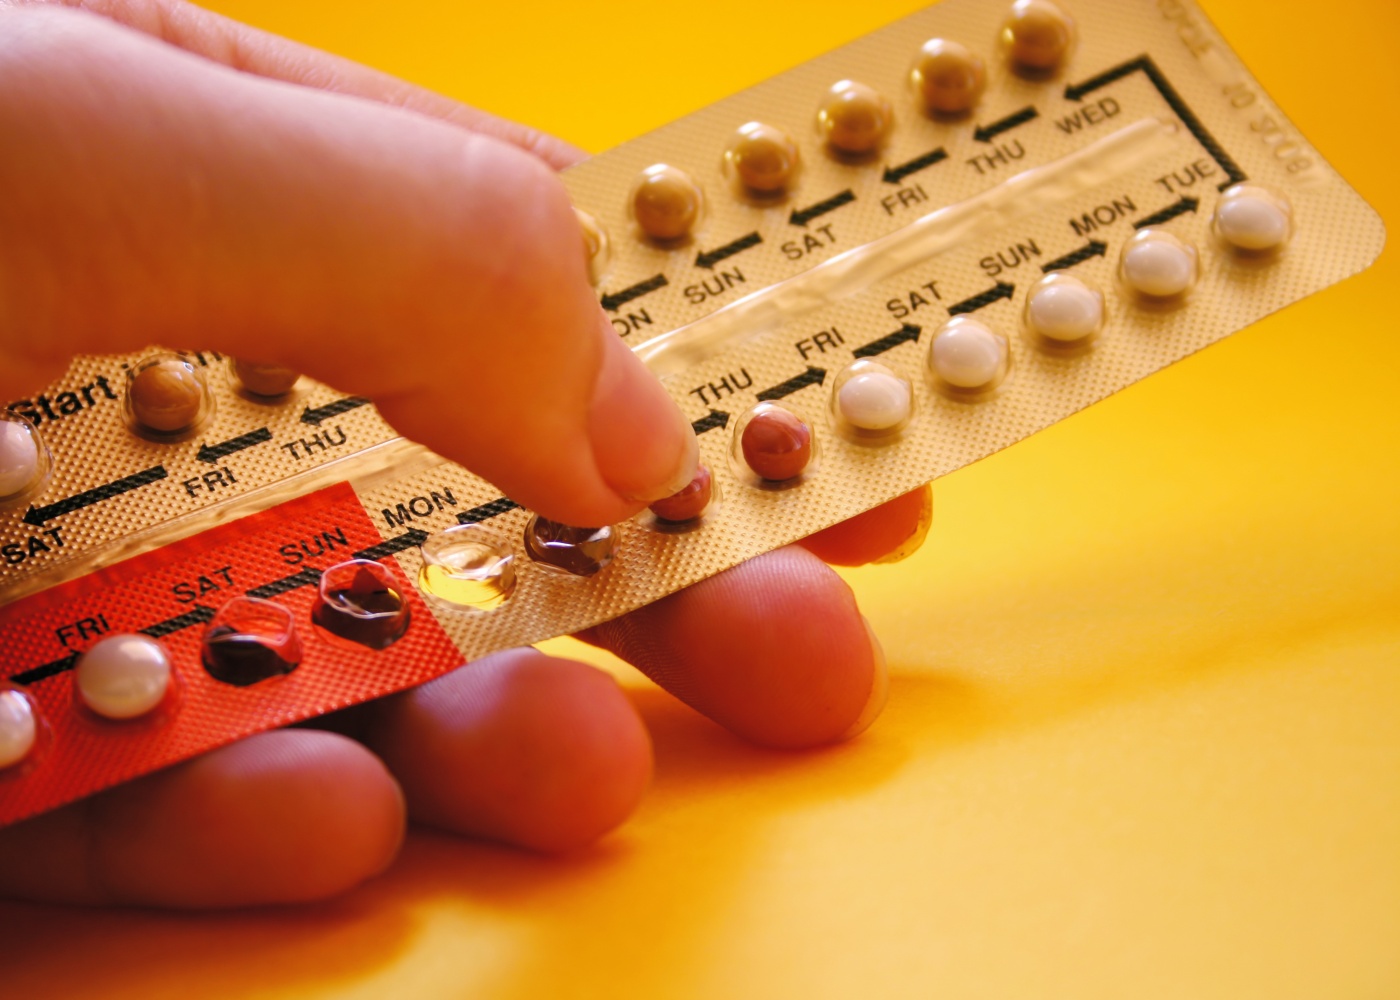 embalagem de pílula contracetiva